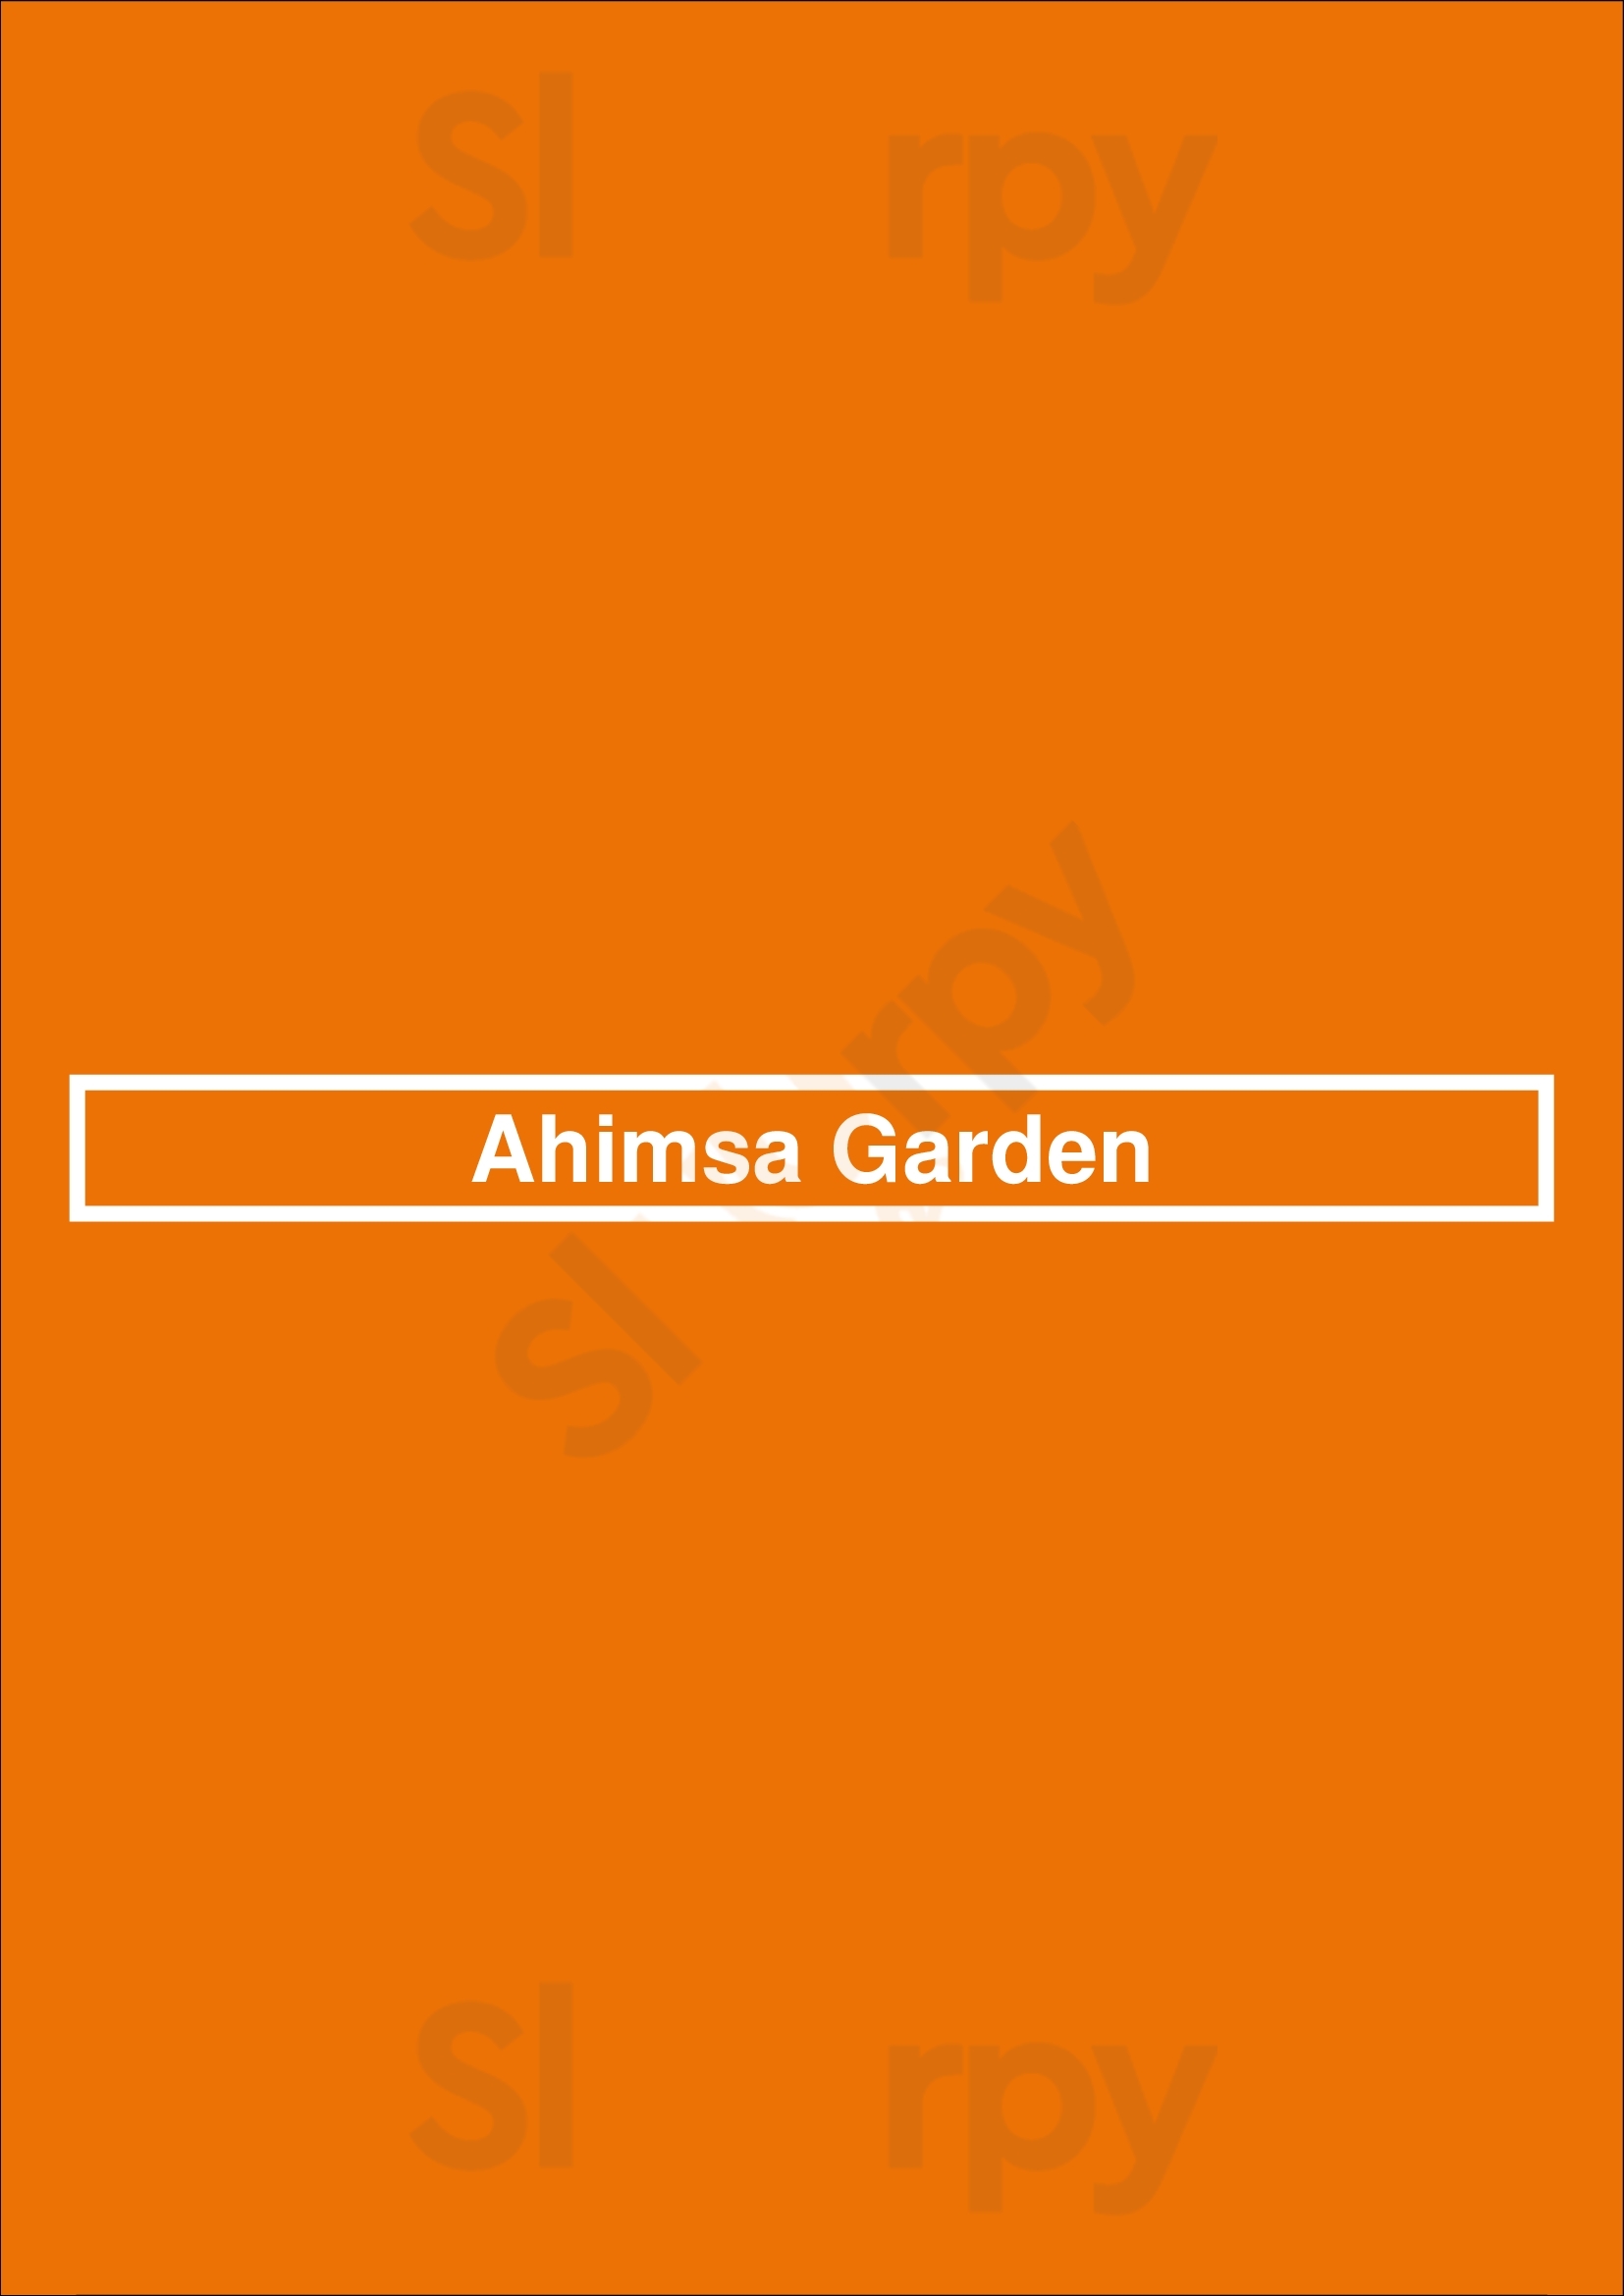 Ahimsa Garden New York City Menu - 1